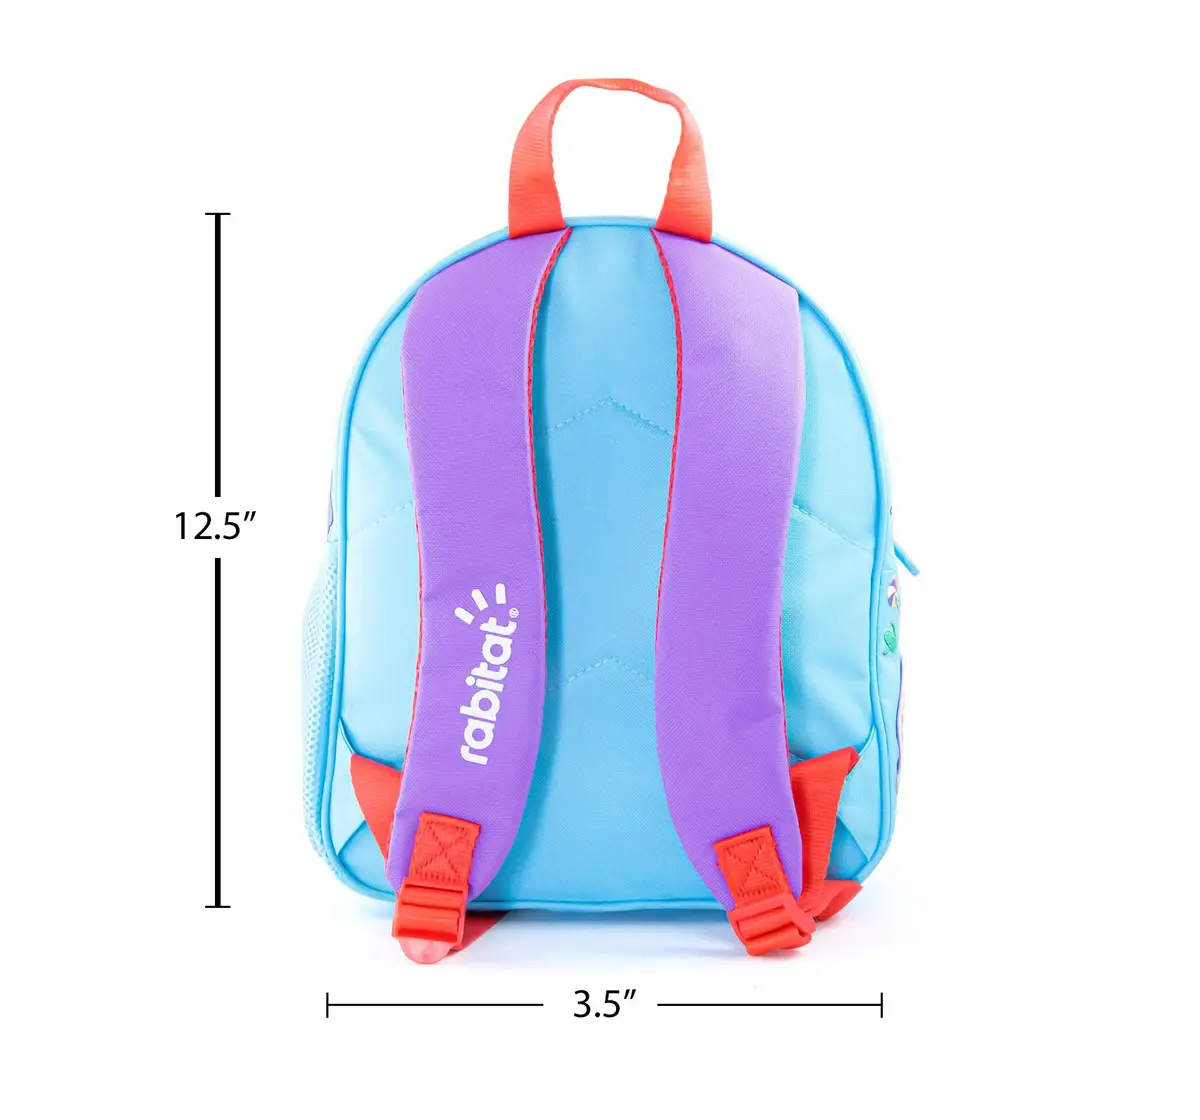 Rabitat Smash School Bag Sizzle 12 Inches For Kids of Age 2Y+, Multicolour